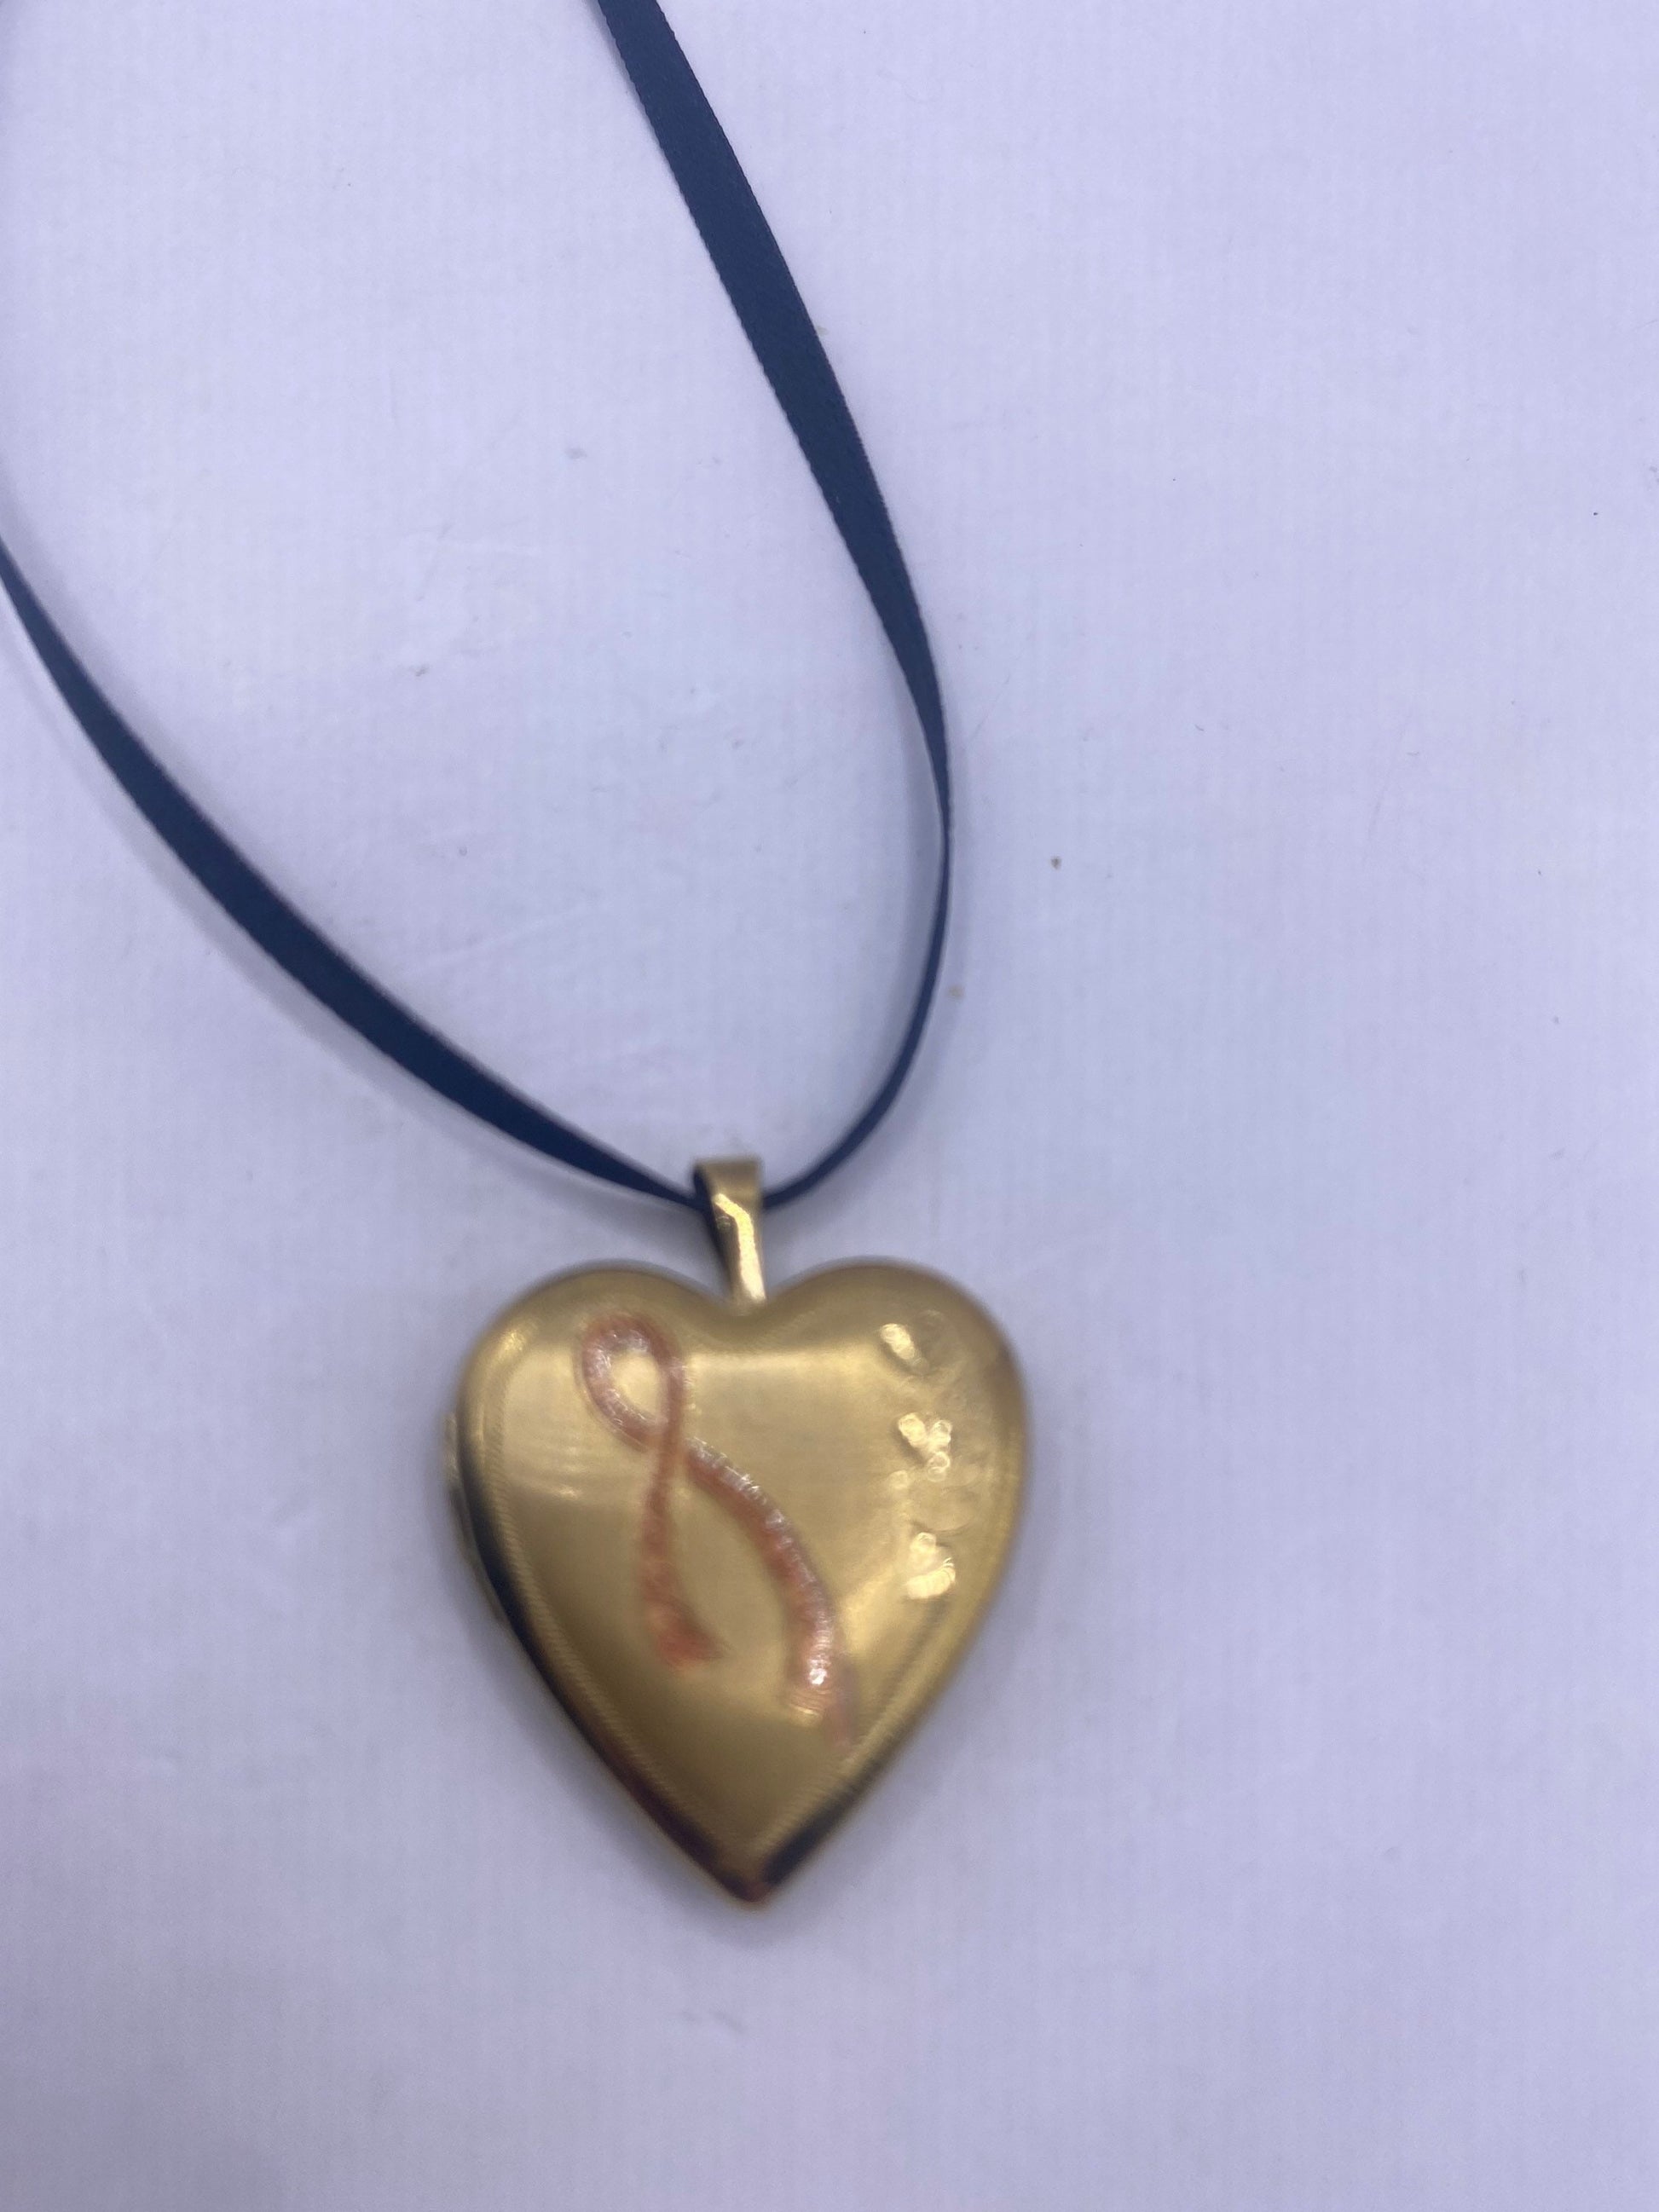 Vintage Gold Locket | Tiny Heart 9k Gold Filled Pendant Photo Memory Charm Engraved Pink Ribbon Hearts | Choker Necklace